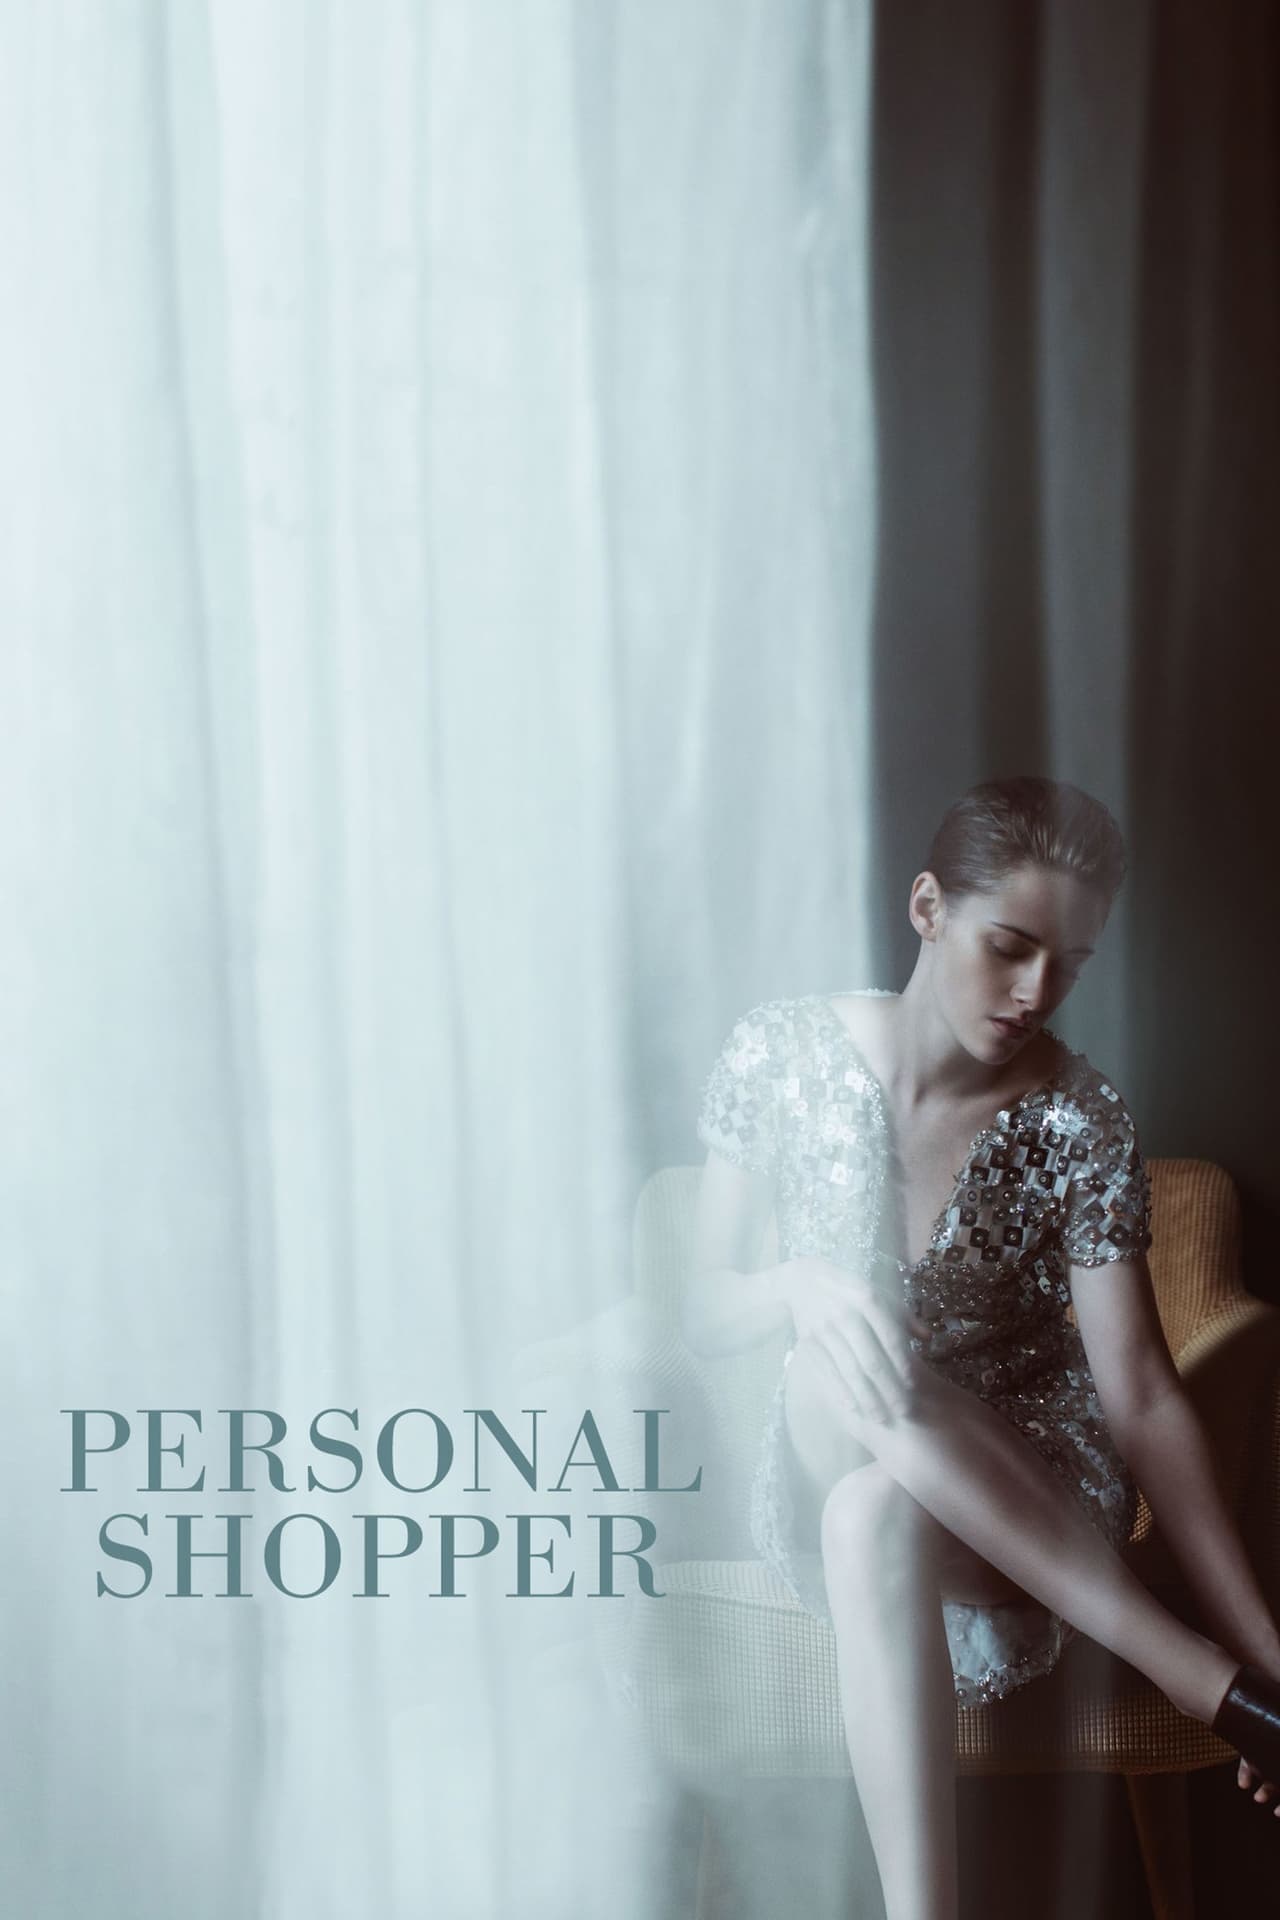 Personal Shopper poster